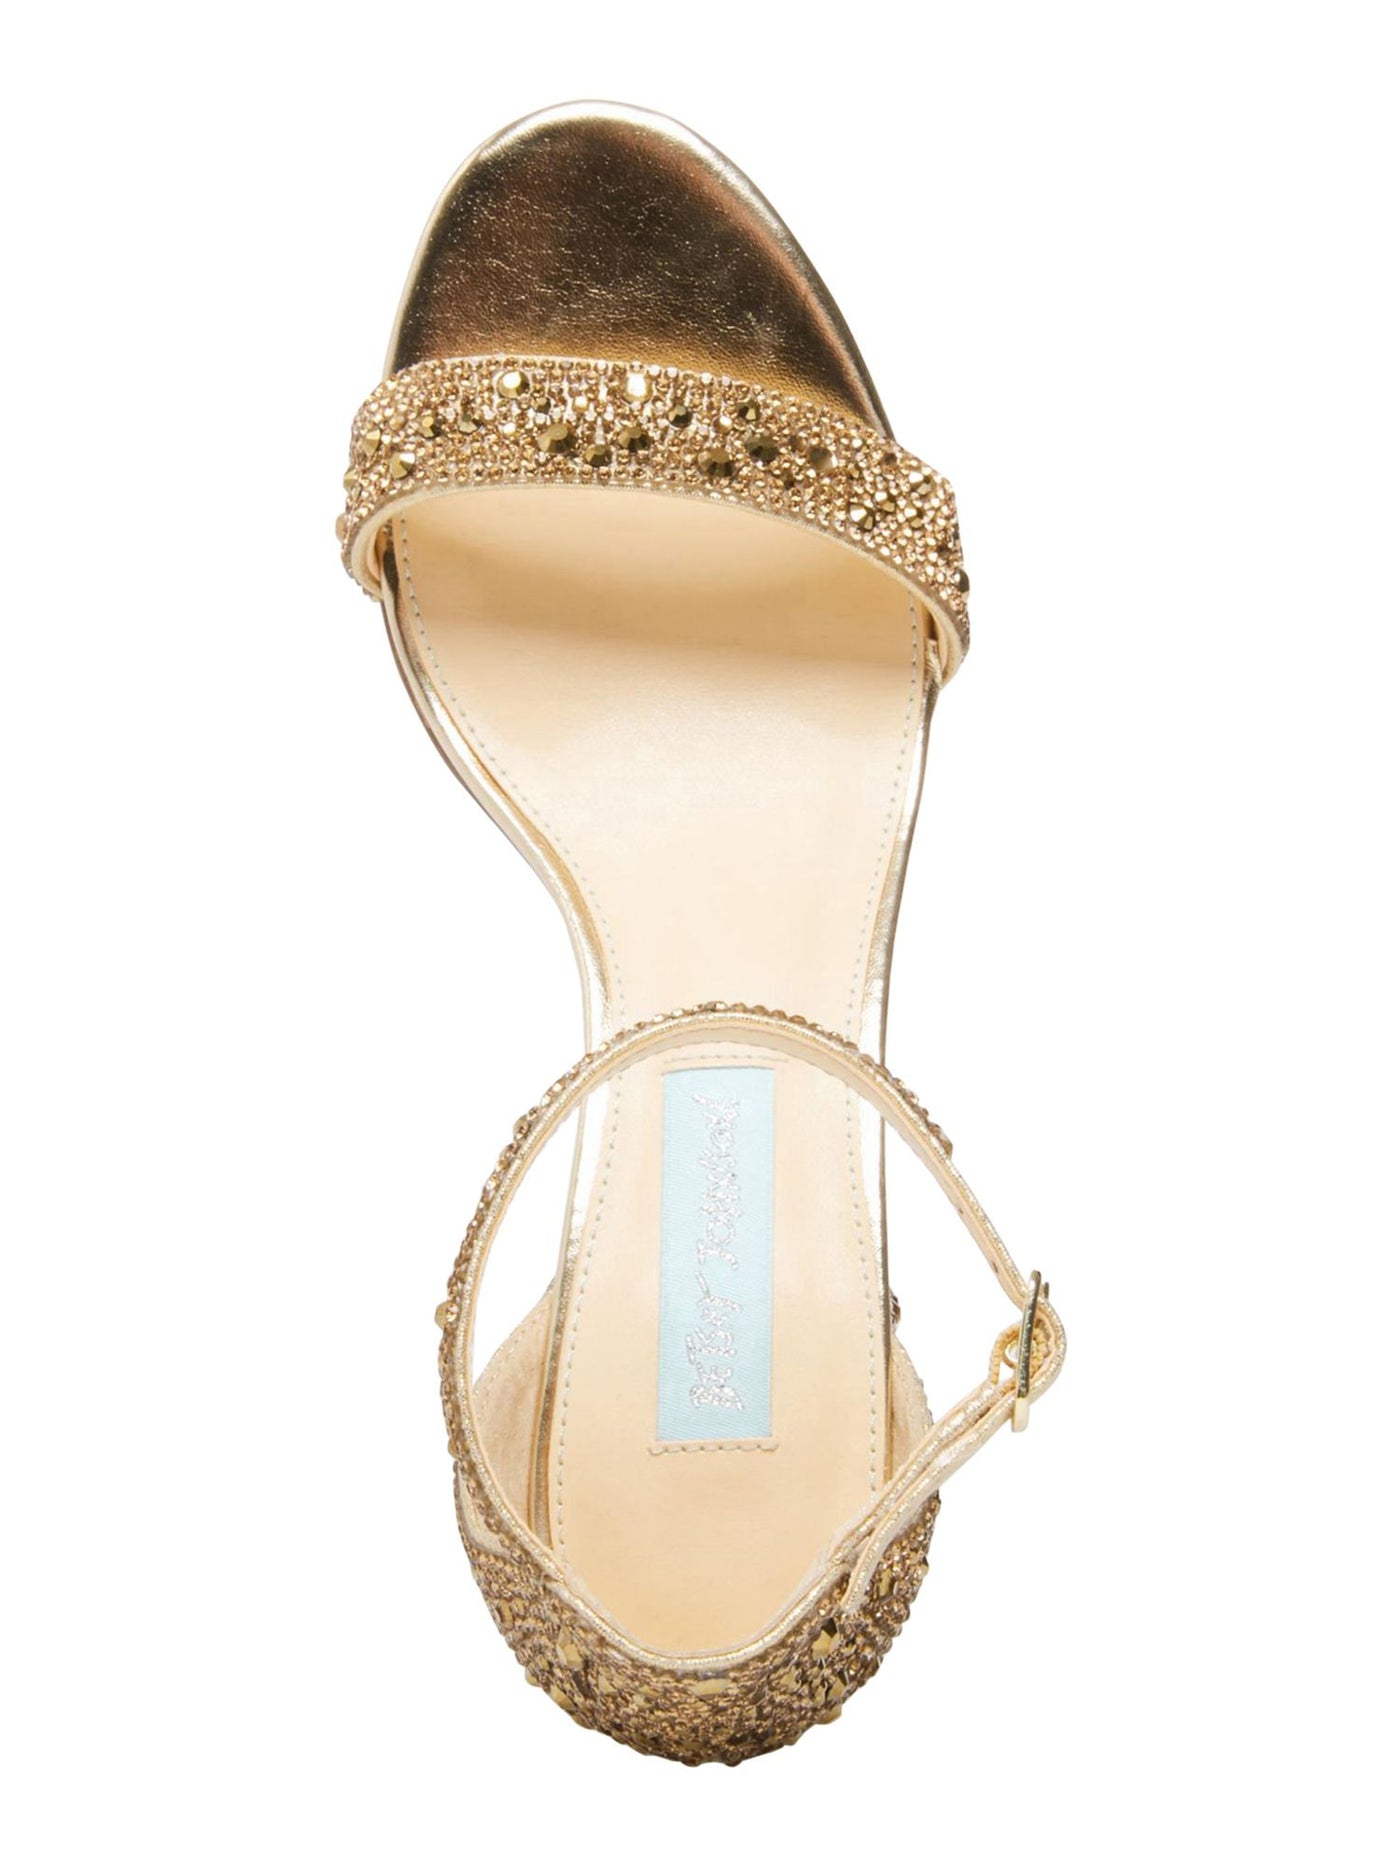 BETSEY JOHNSON Womens Gold Rhinestone Embellishment Ankle Strap Adjustable Mari Round Toe Block Heel Buckle Dress Sandals Shoes 5.5 M